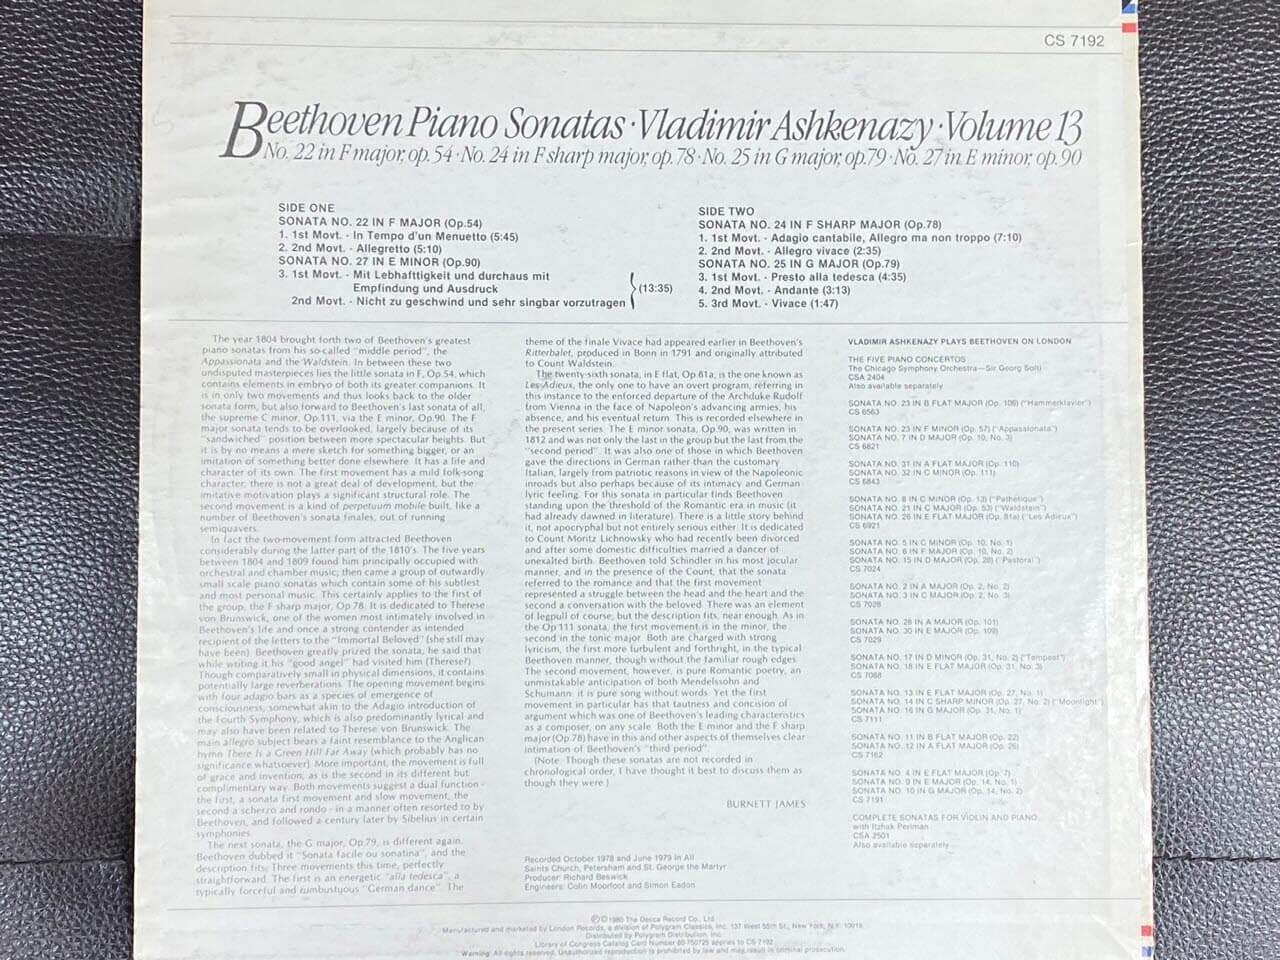 [LP] 아슈케나지 - Ashkenazy - Beethoven Piano Sonatas Volume 13 LP [U.S반]